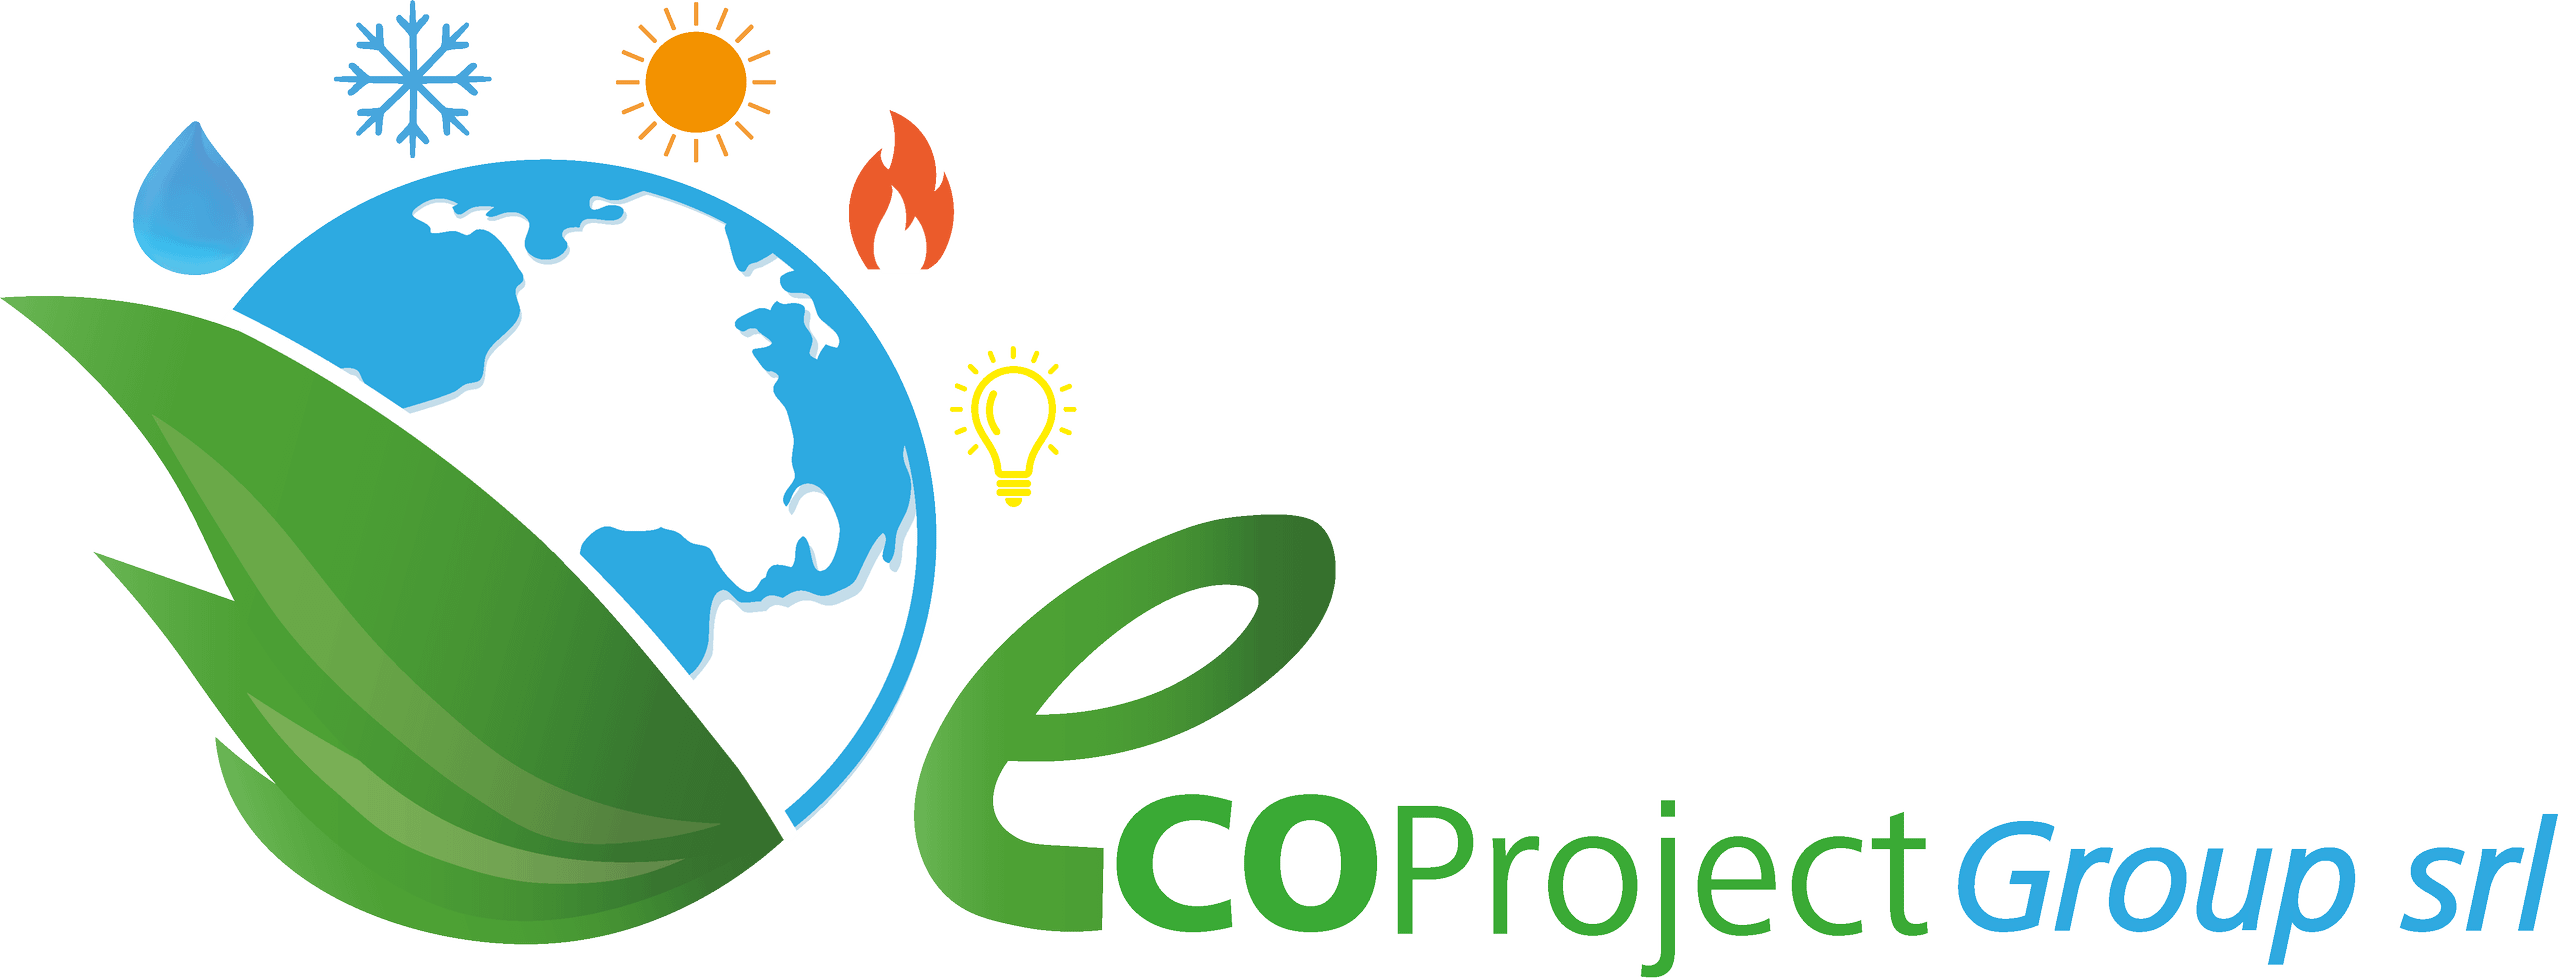 Eco Project group SHOP